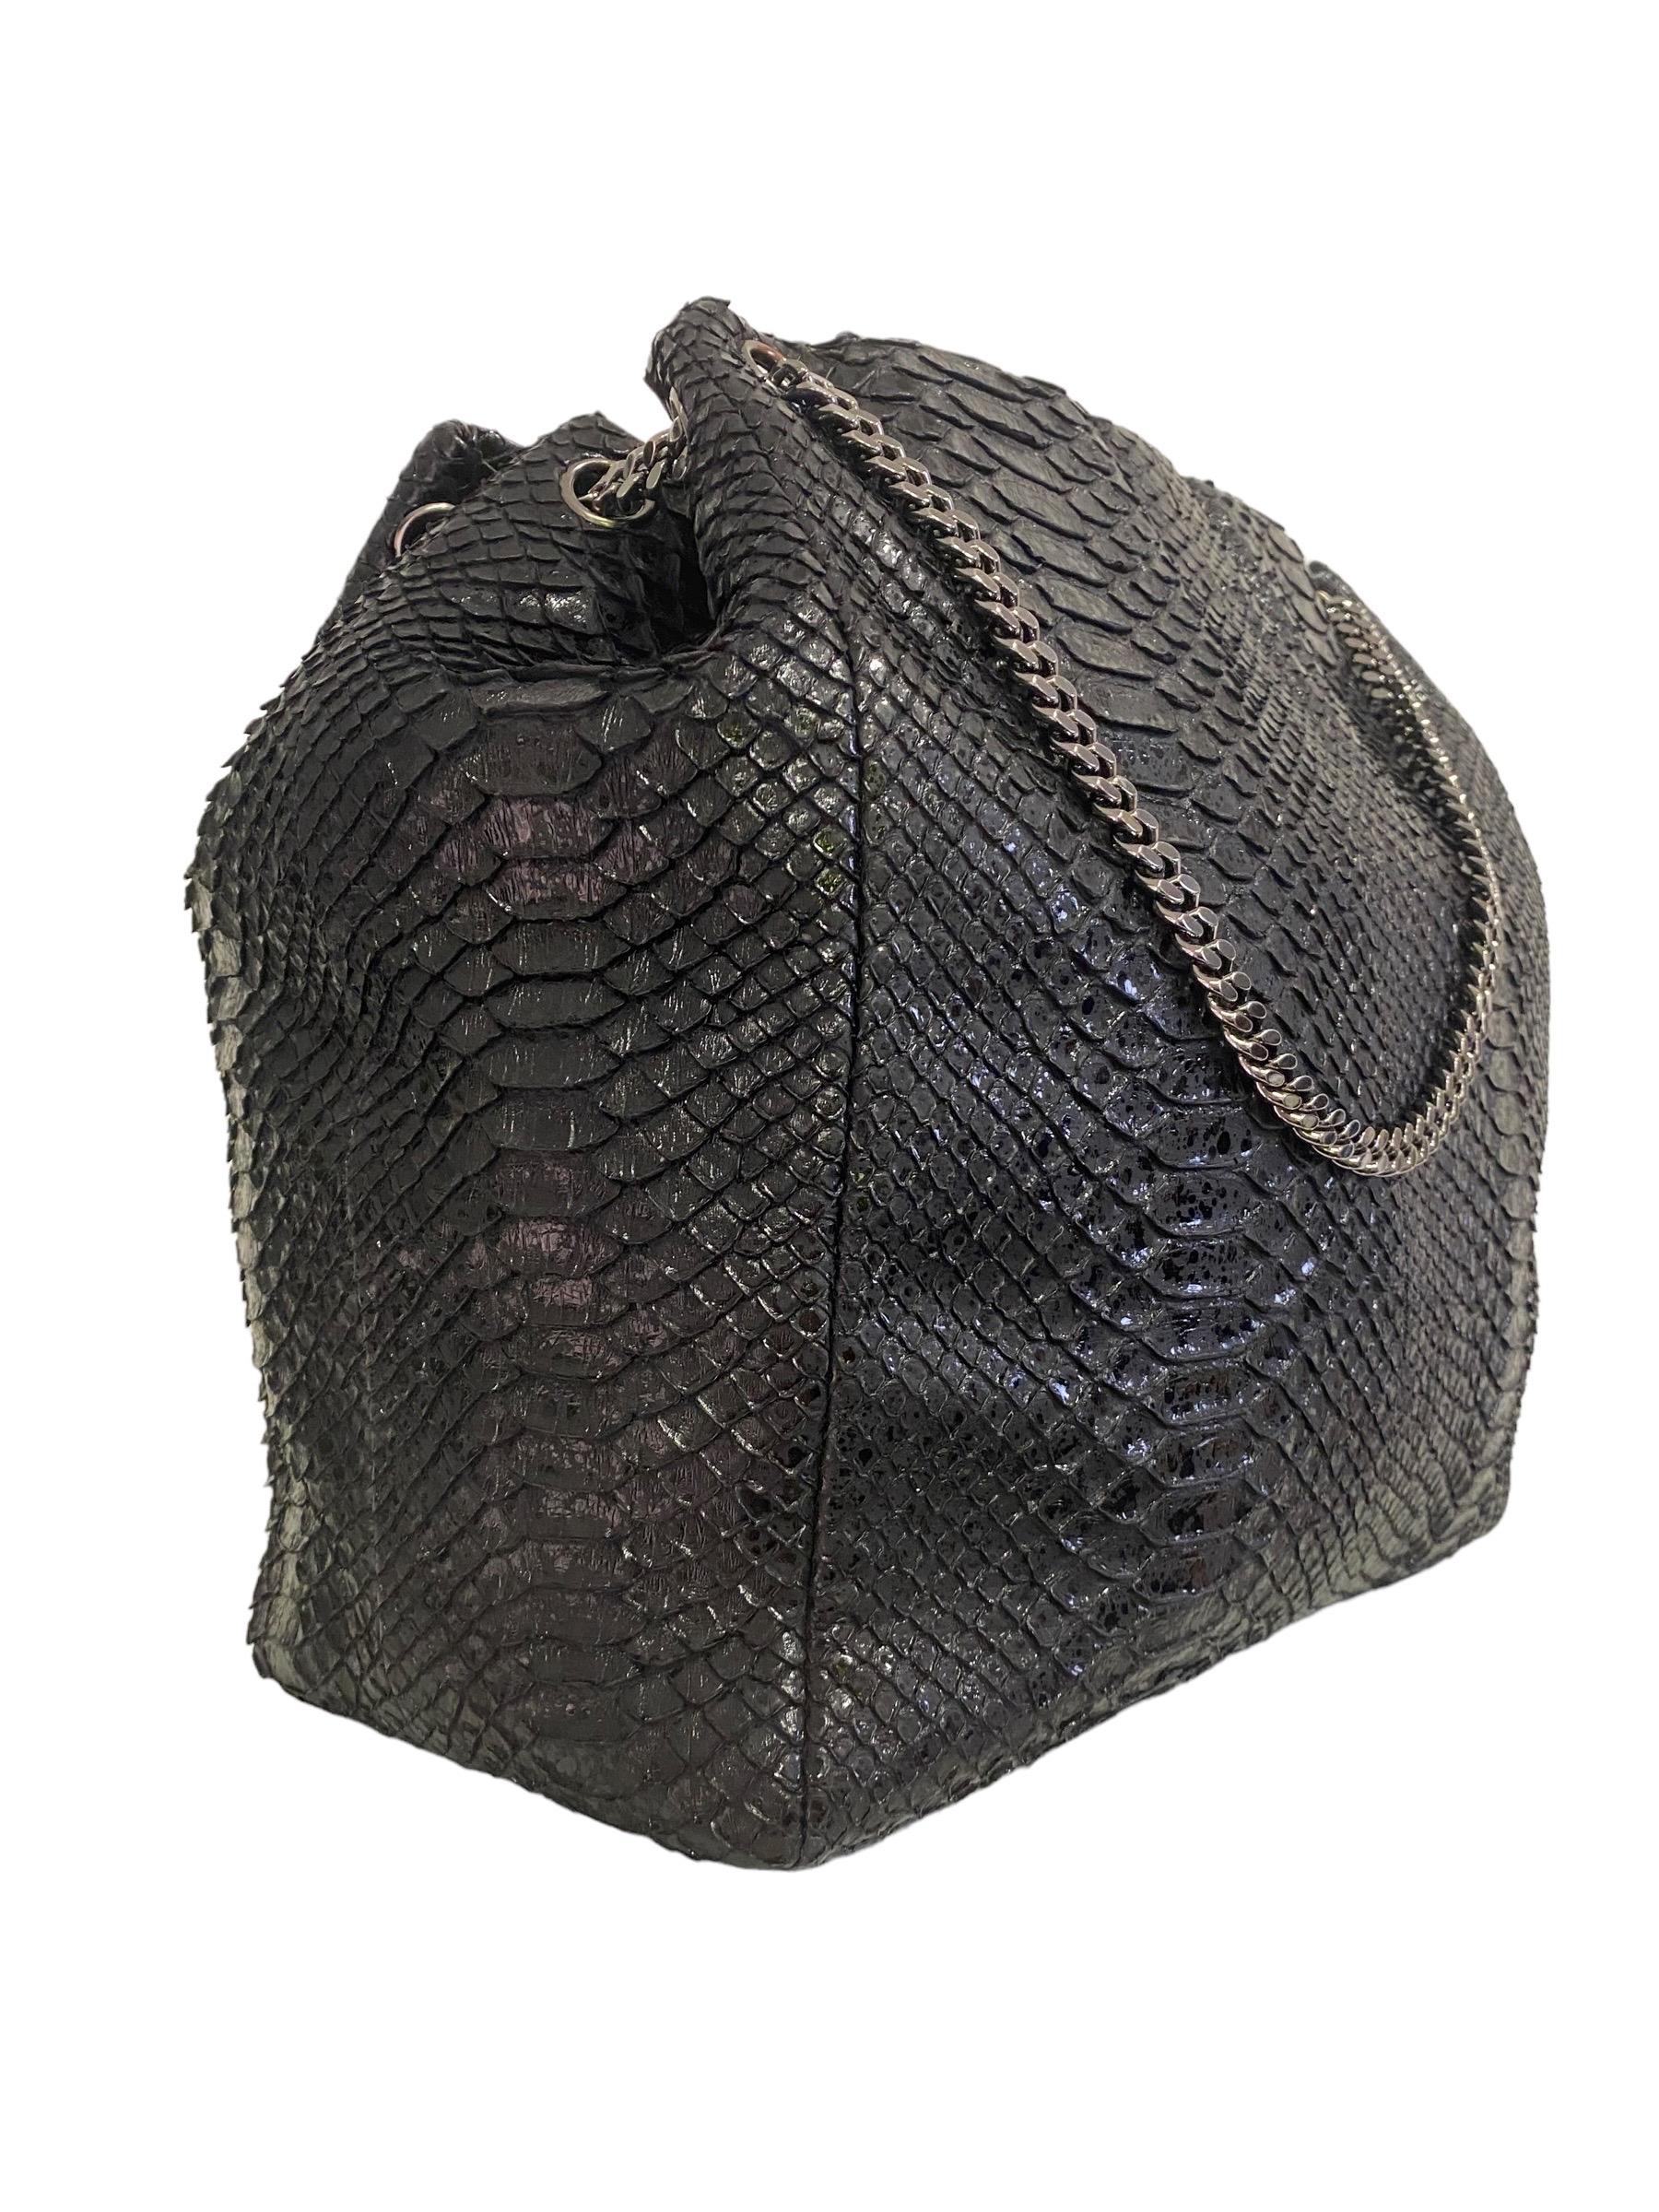 2009 Chanel Tote Black Piton Hobo Bag For Sale 2